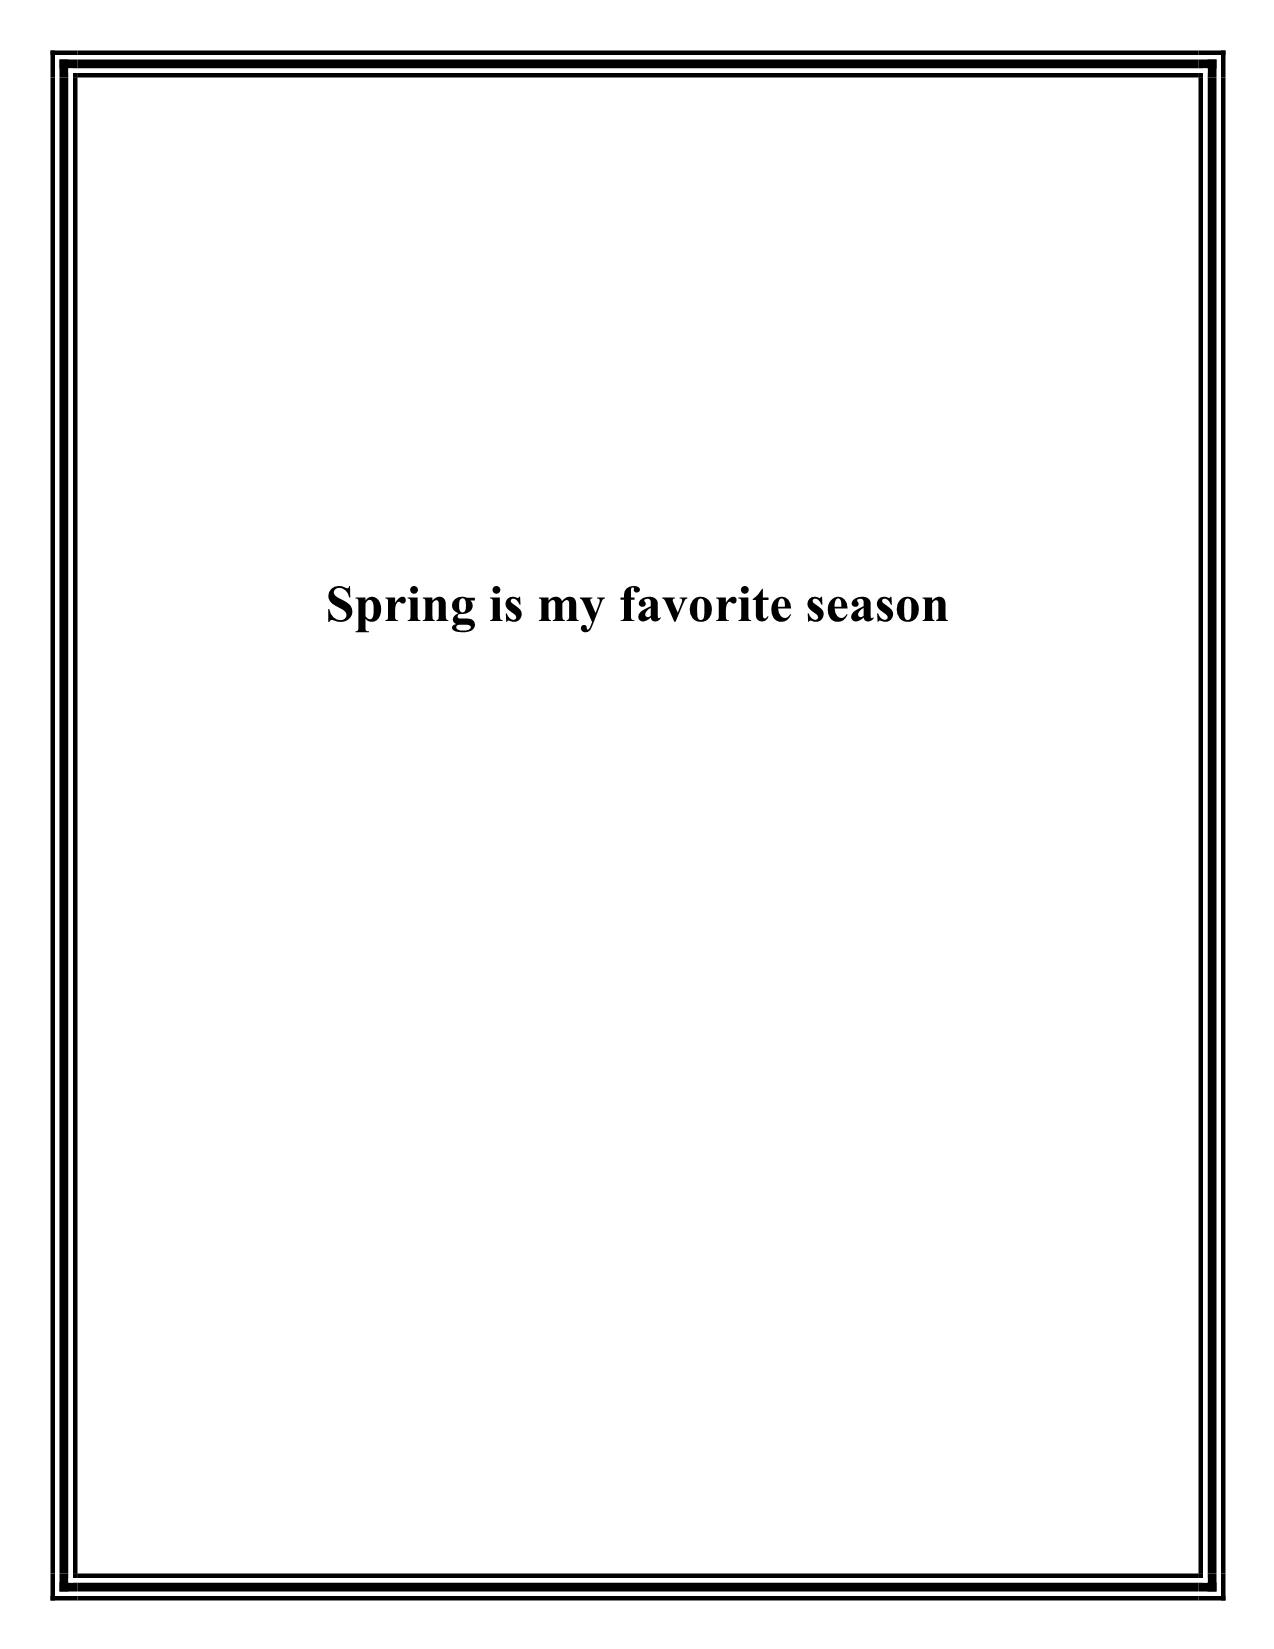 Spring is my favorite season trang 1